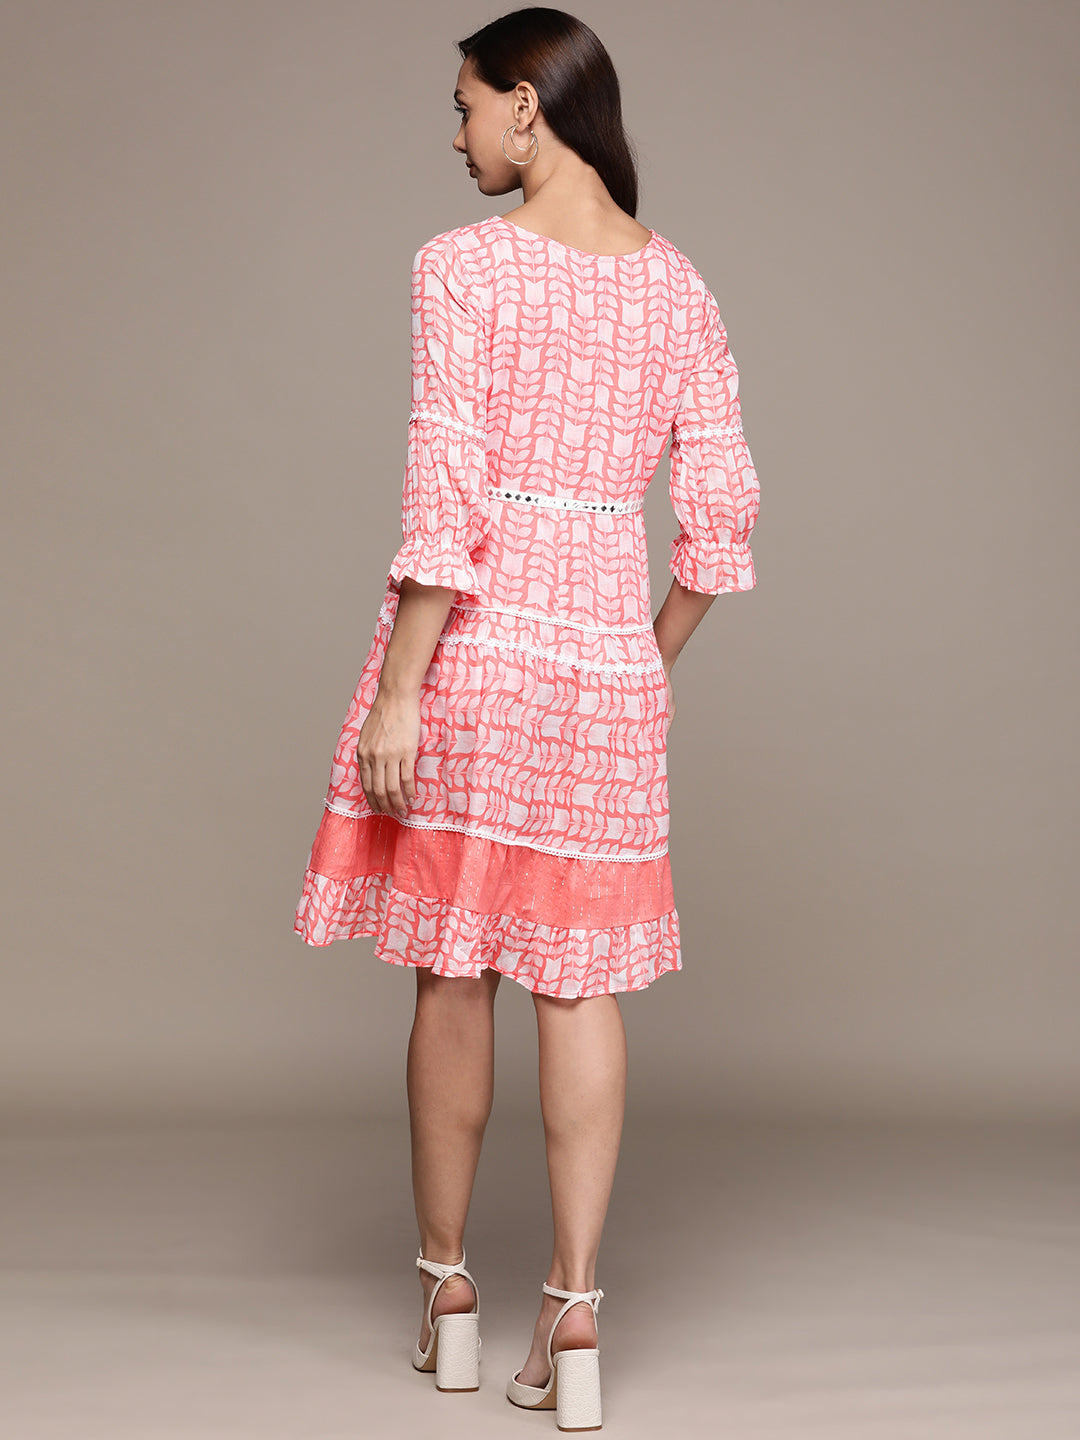 Ishin Women's Cotton Pink Embellished A-Line Dress